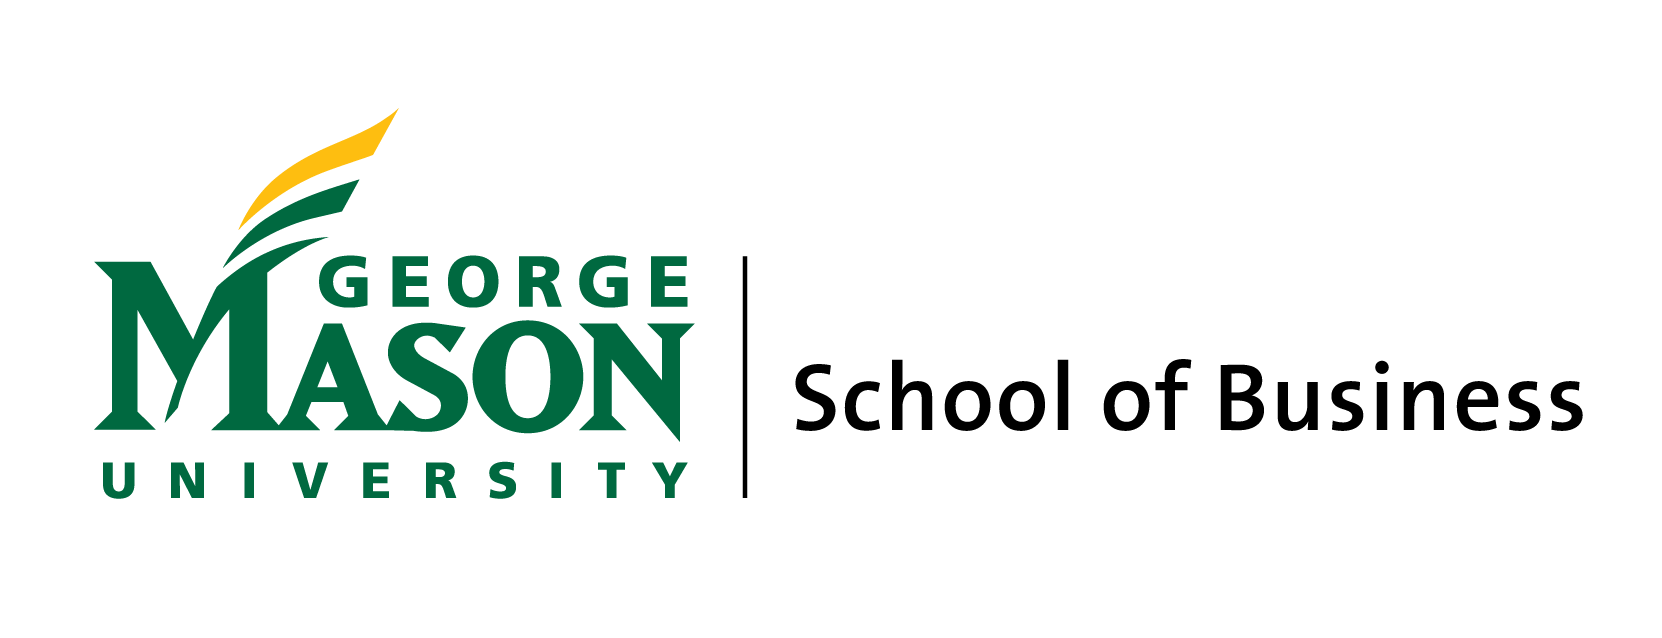 George Mason Universith School of Business